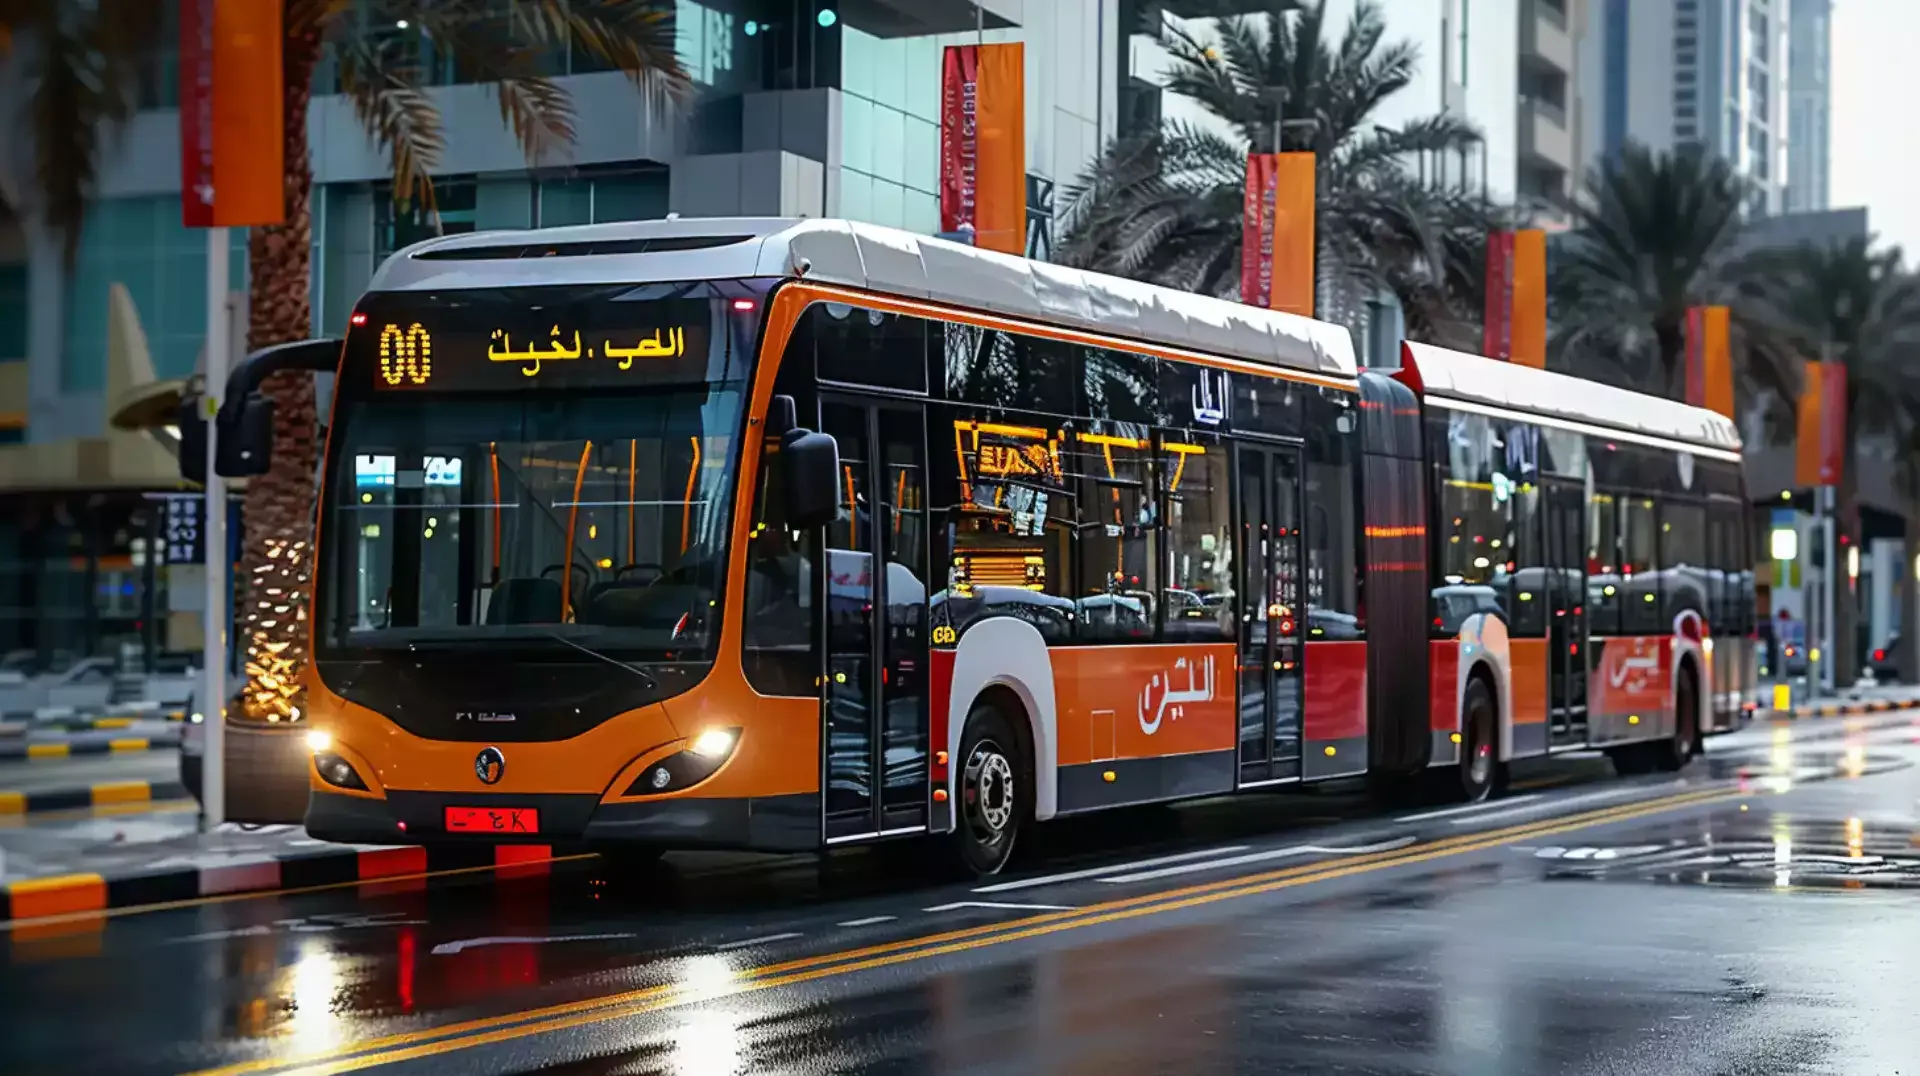 Al Furjan Transportation - Connecting Communities Through Convenient Travel Options